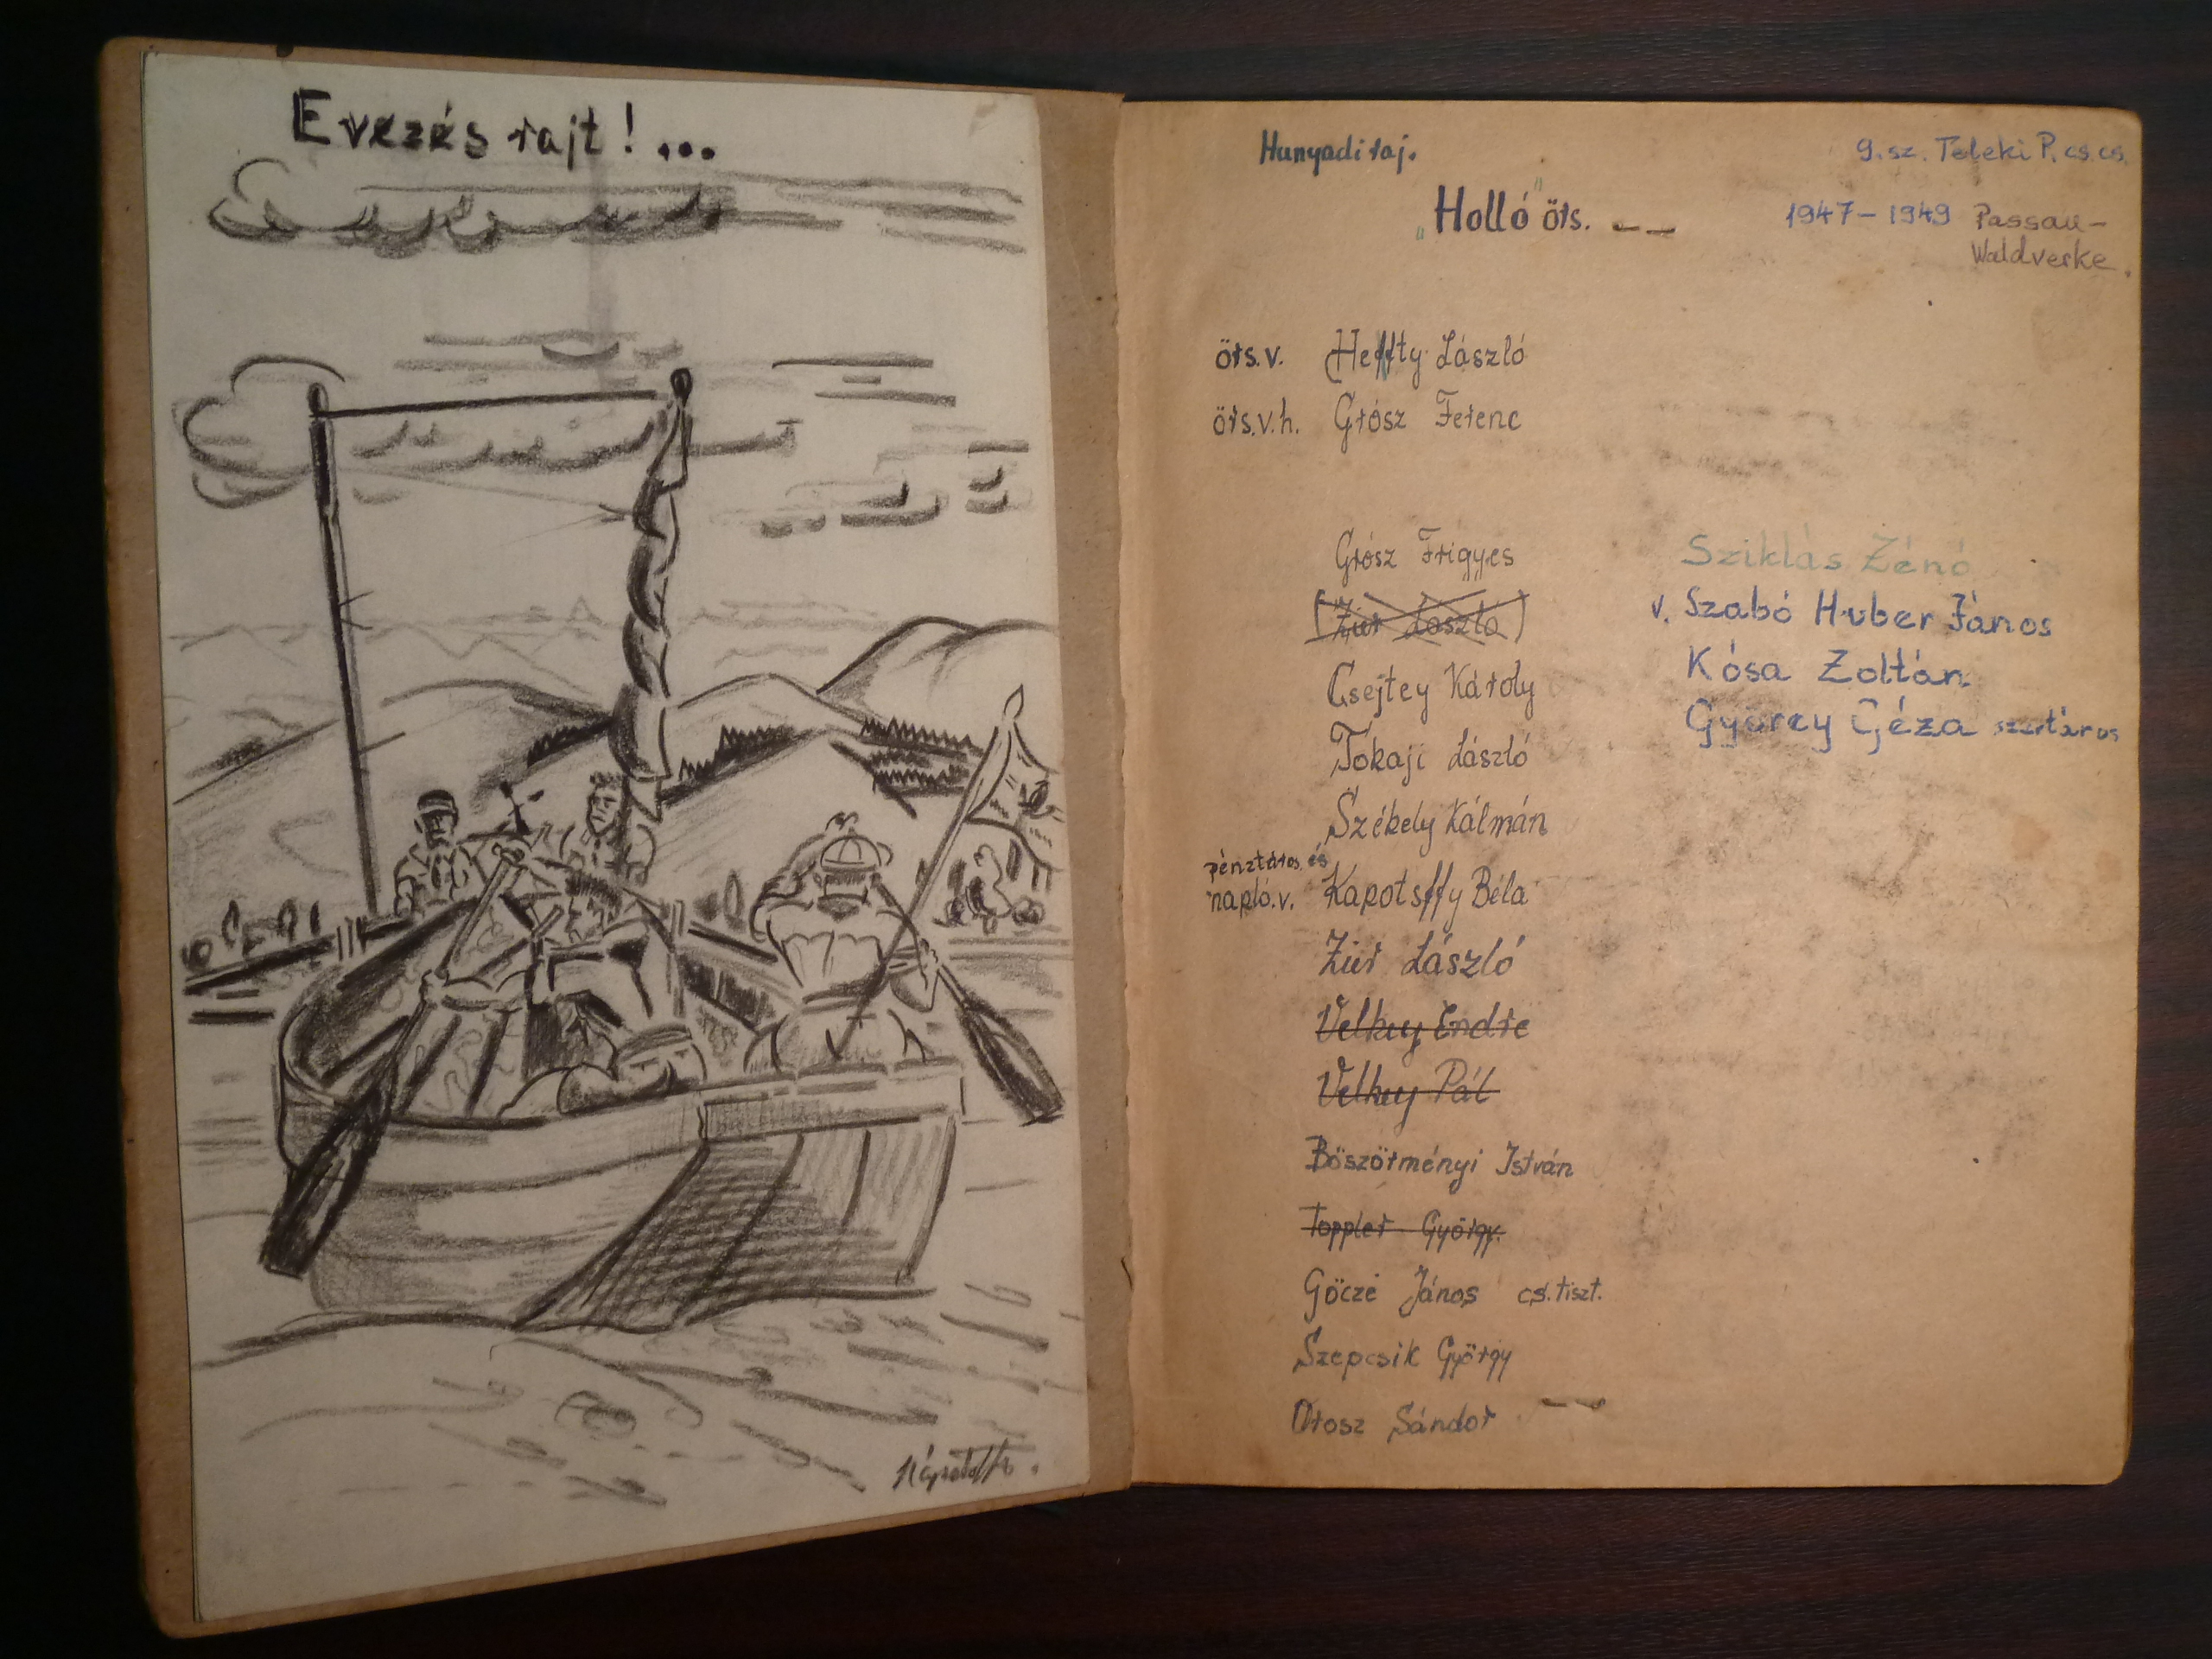 Diary of the emigrant Hungarian boyscout peleton 'Raven' - Passau, Germany 1947-1949